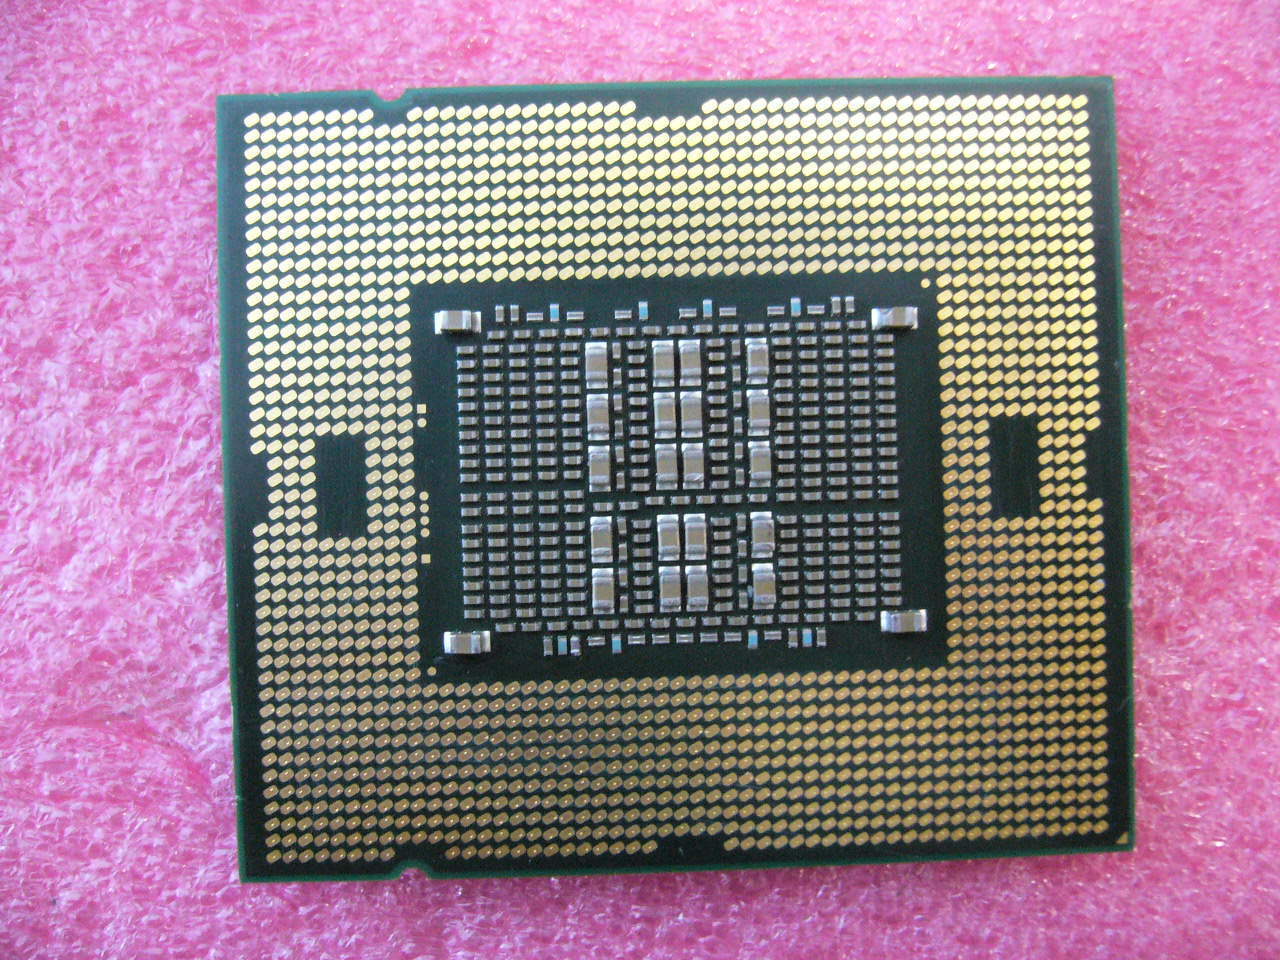 QTY 1x INTEL Ten-Core CPU E7-2860 2.26GHZ/24MB LGA1567 SLC3H - Click Image to Close